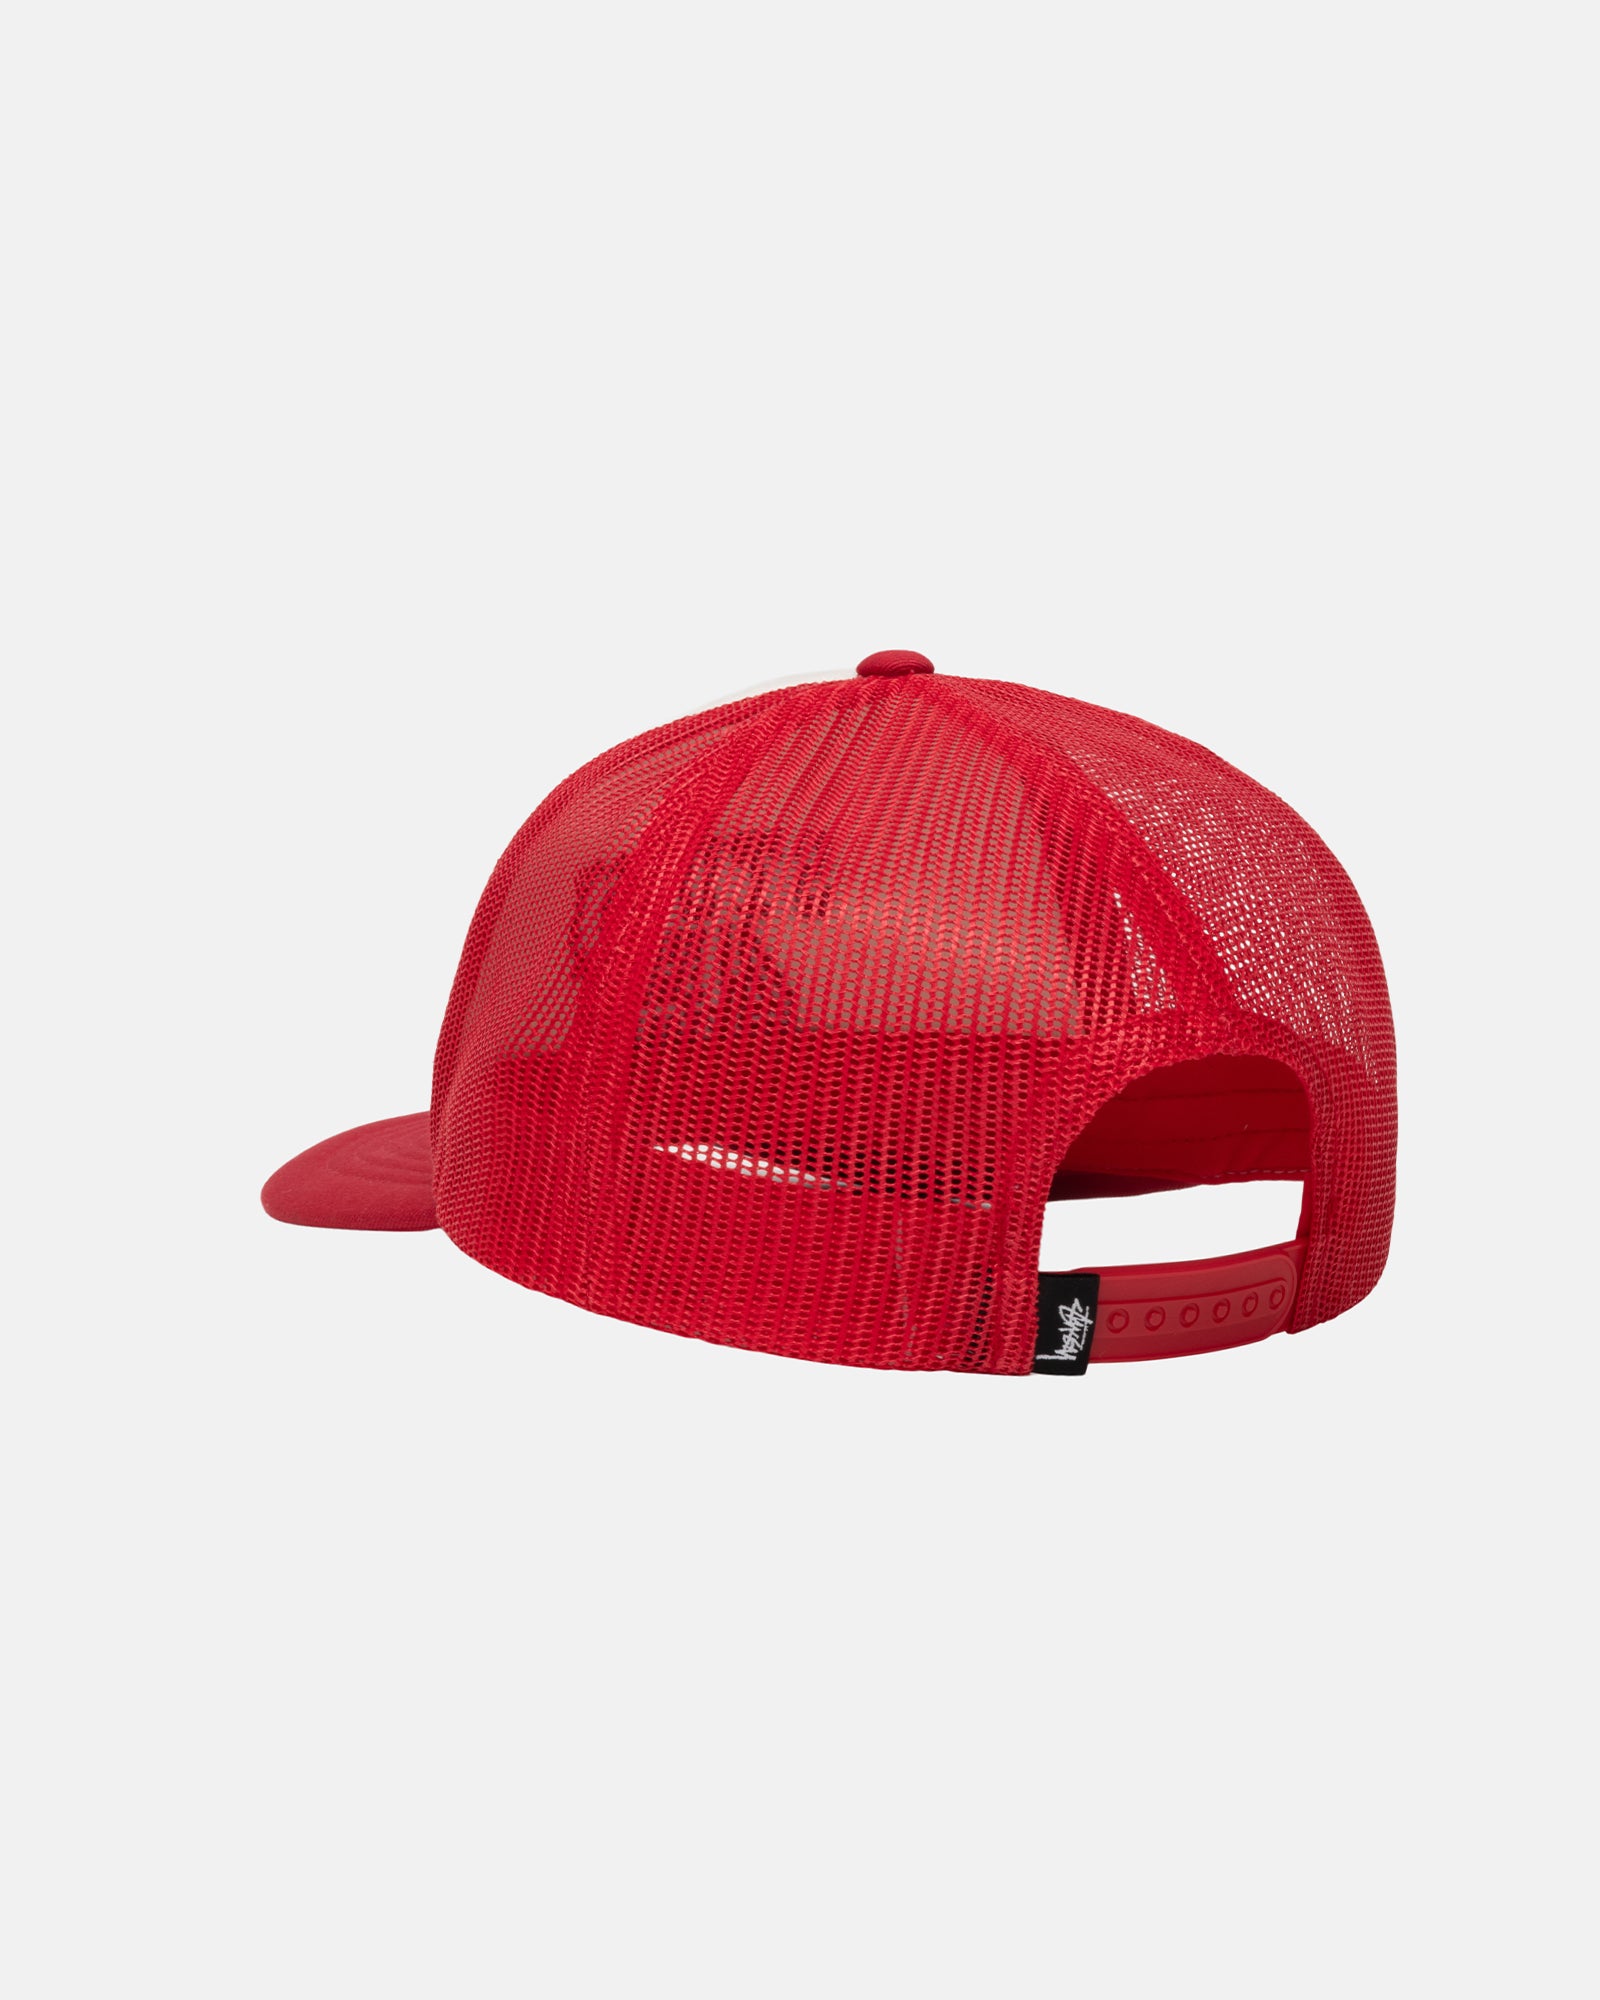 Stüssy Trucker Big 4 Snapback Red Headwear